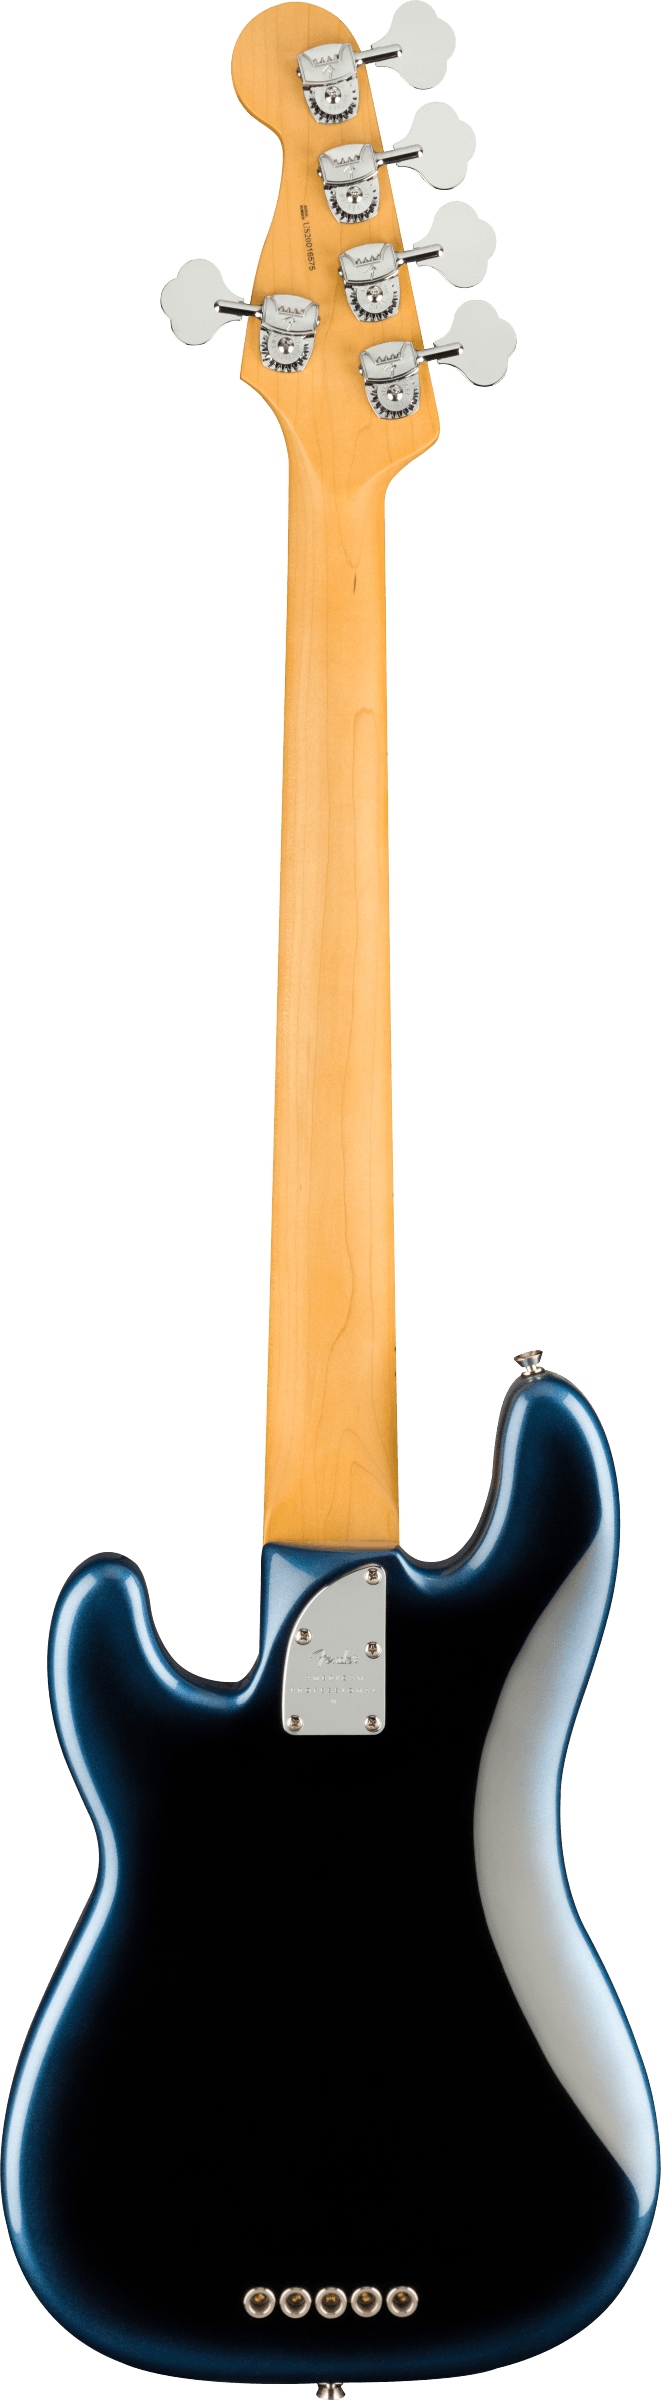 Fender American Professional II Precision Bass V, Maple Fingerboard, Dark Night